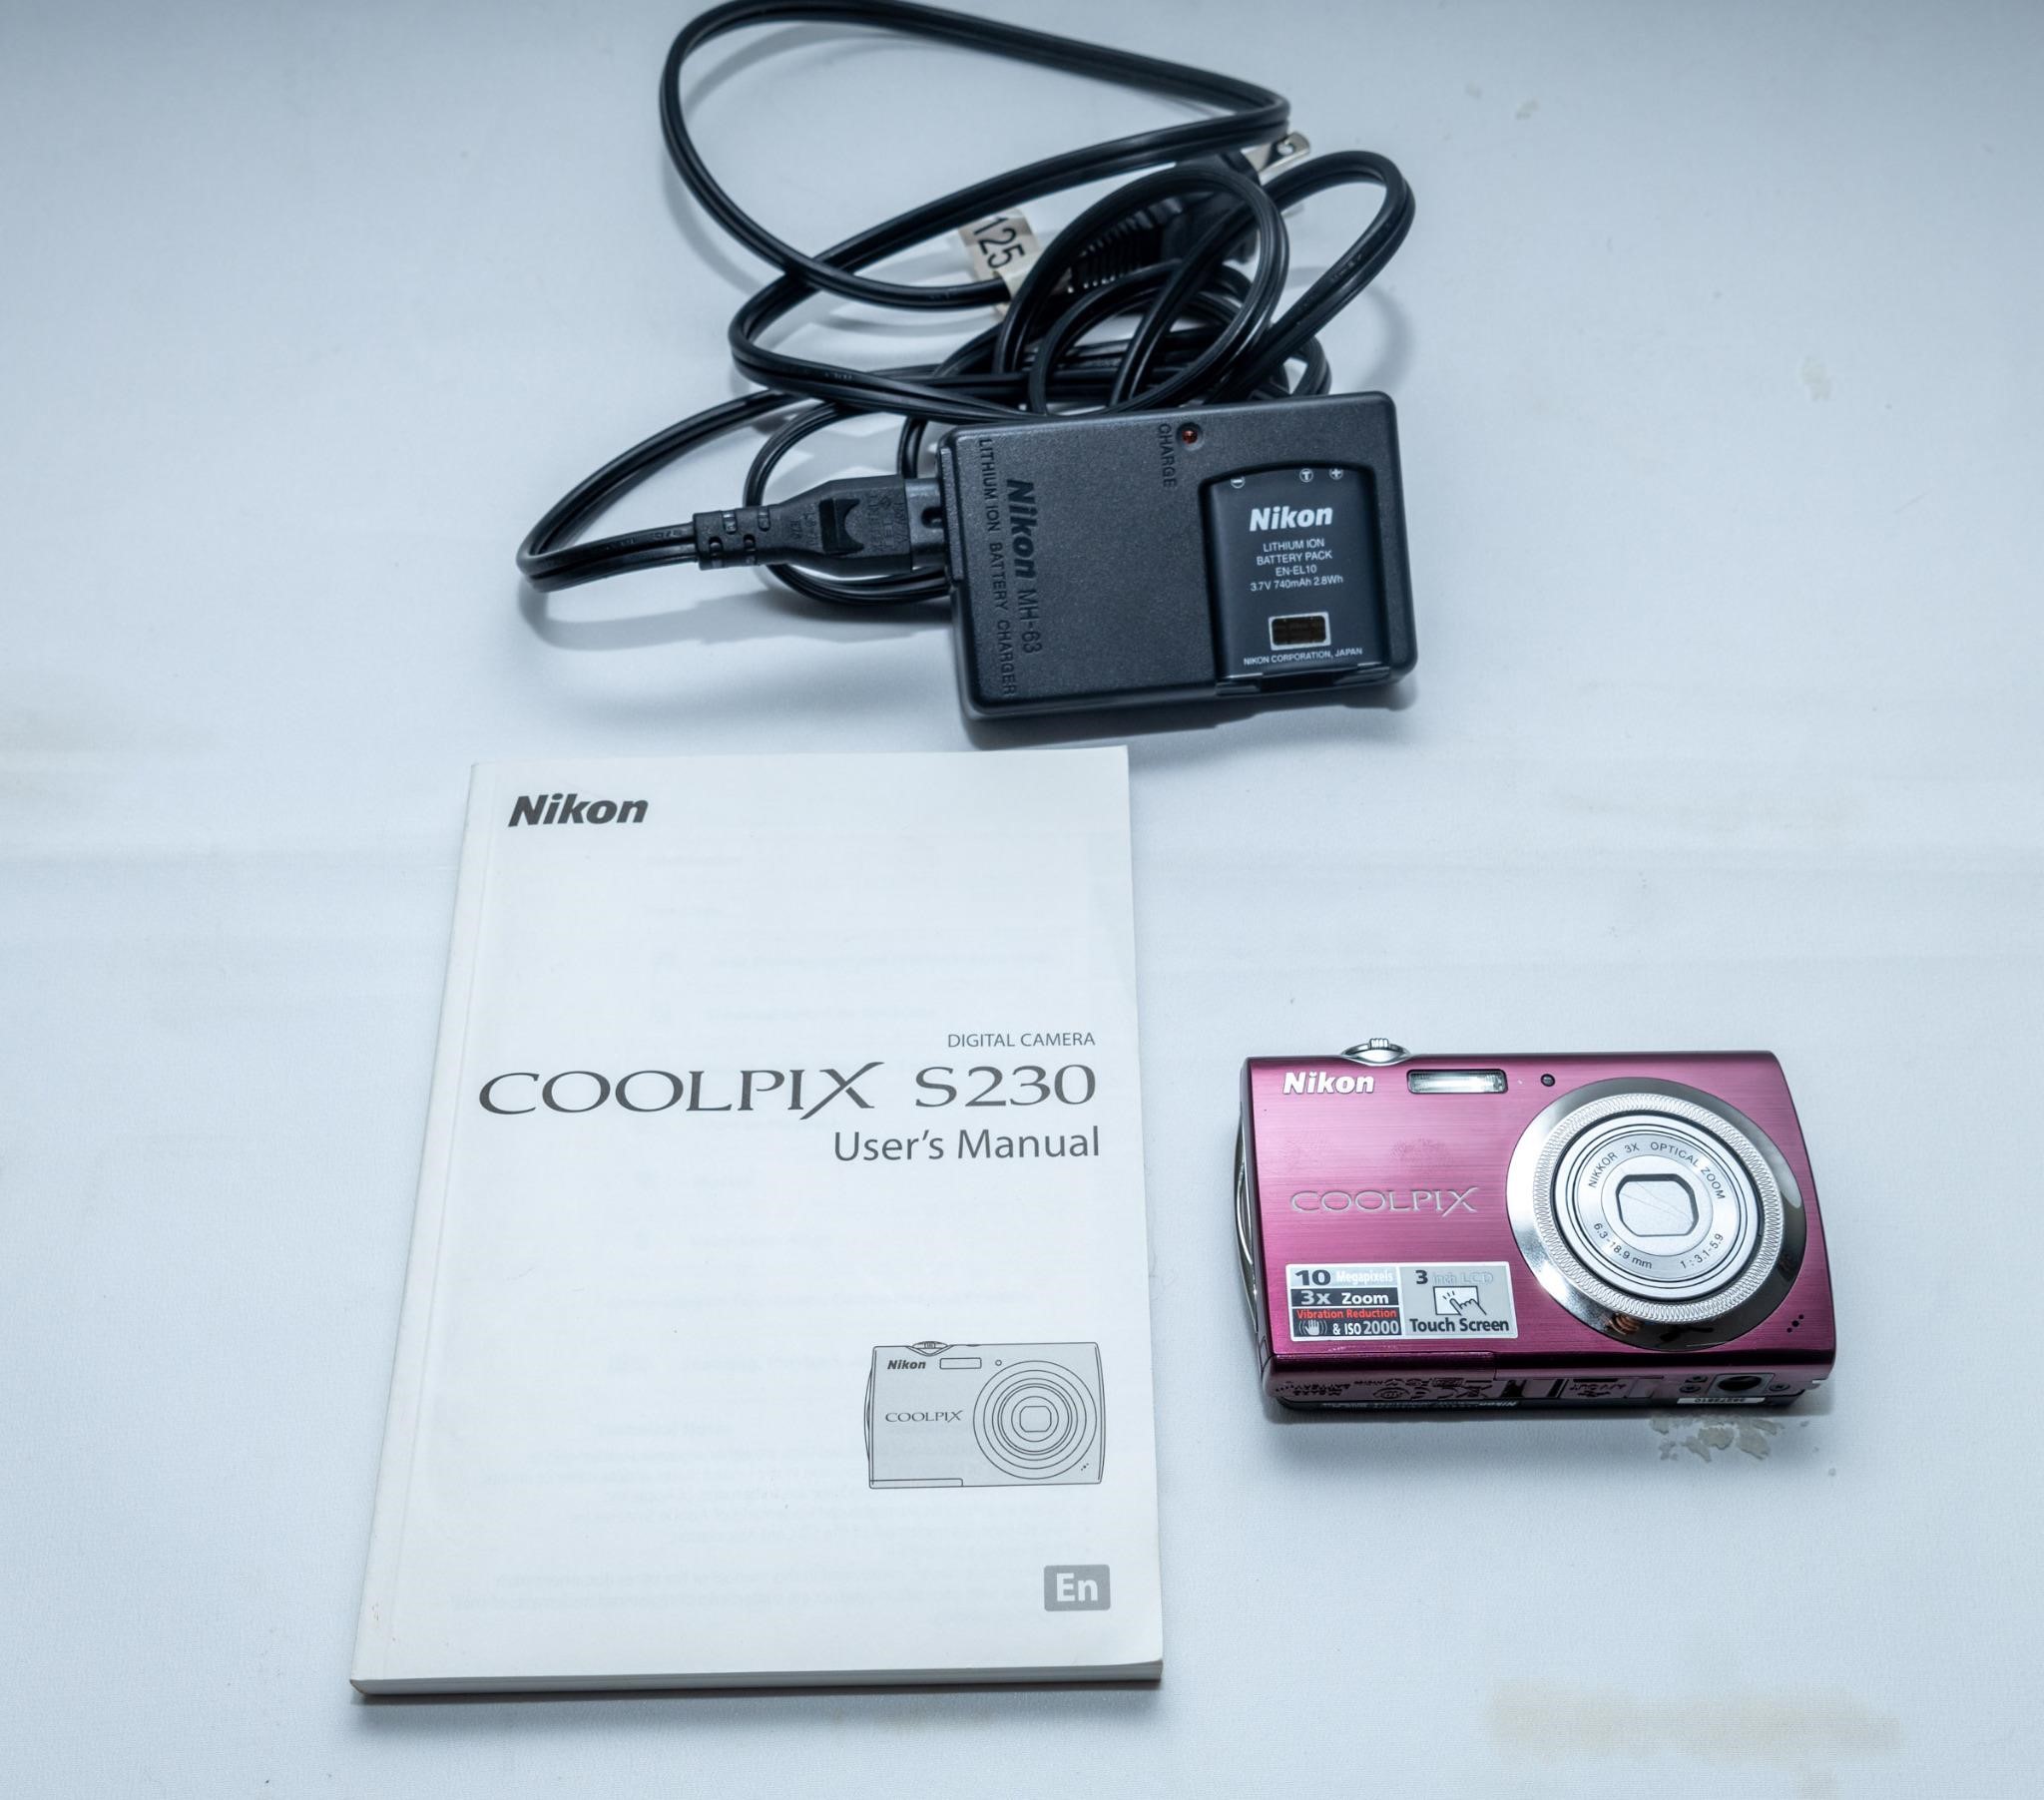 Nikon Coolpix S230 camera